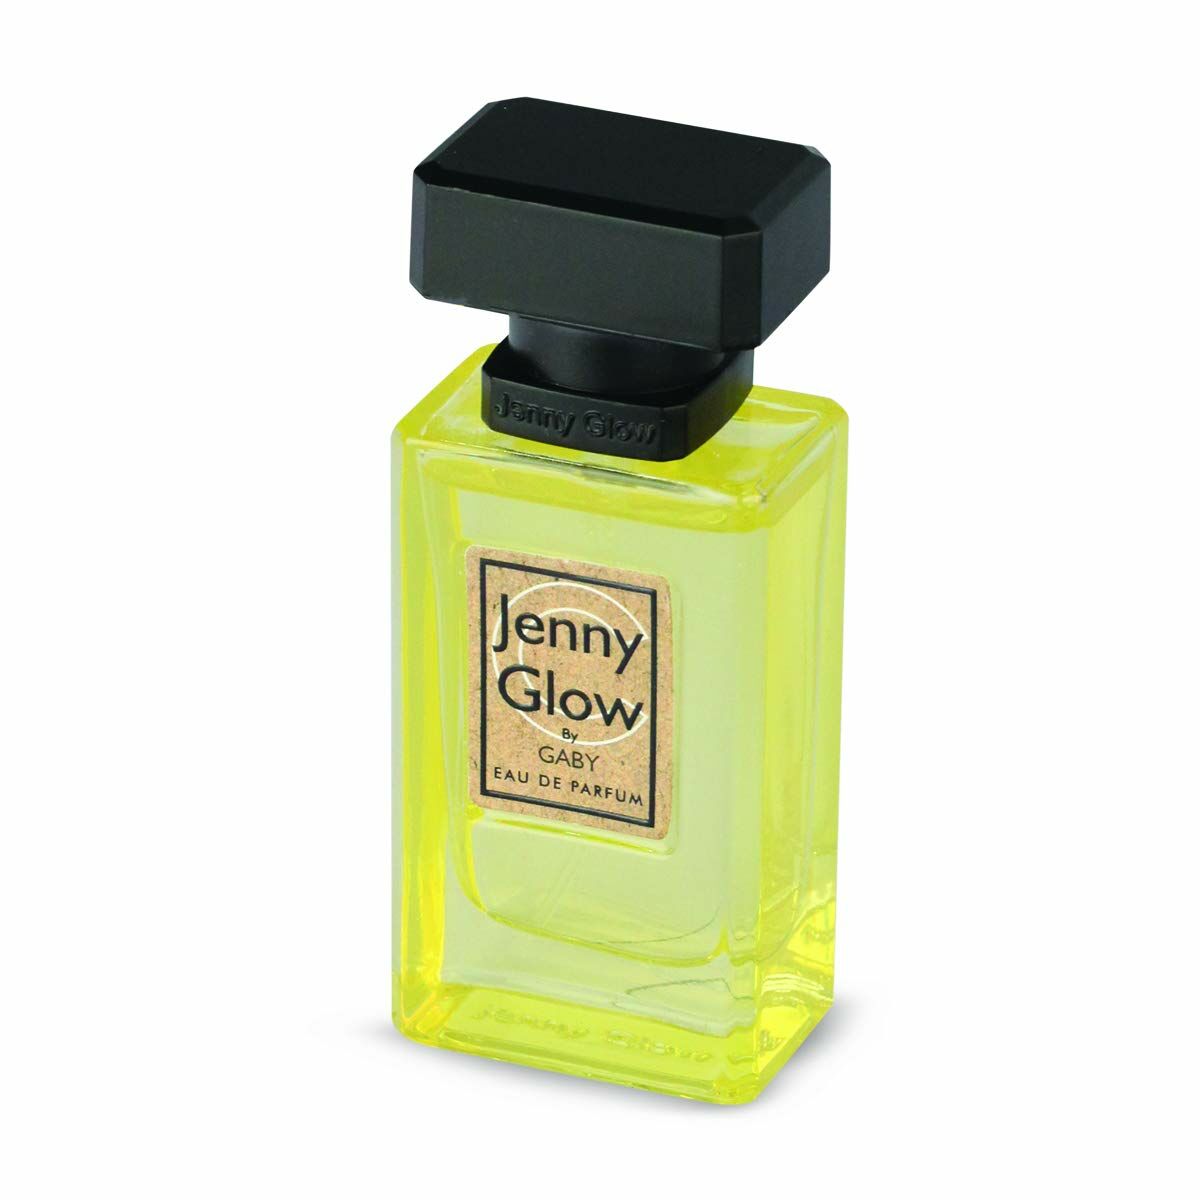 Profumo Donna Jenny Glow   EDP C Gaby (30 ml)